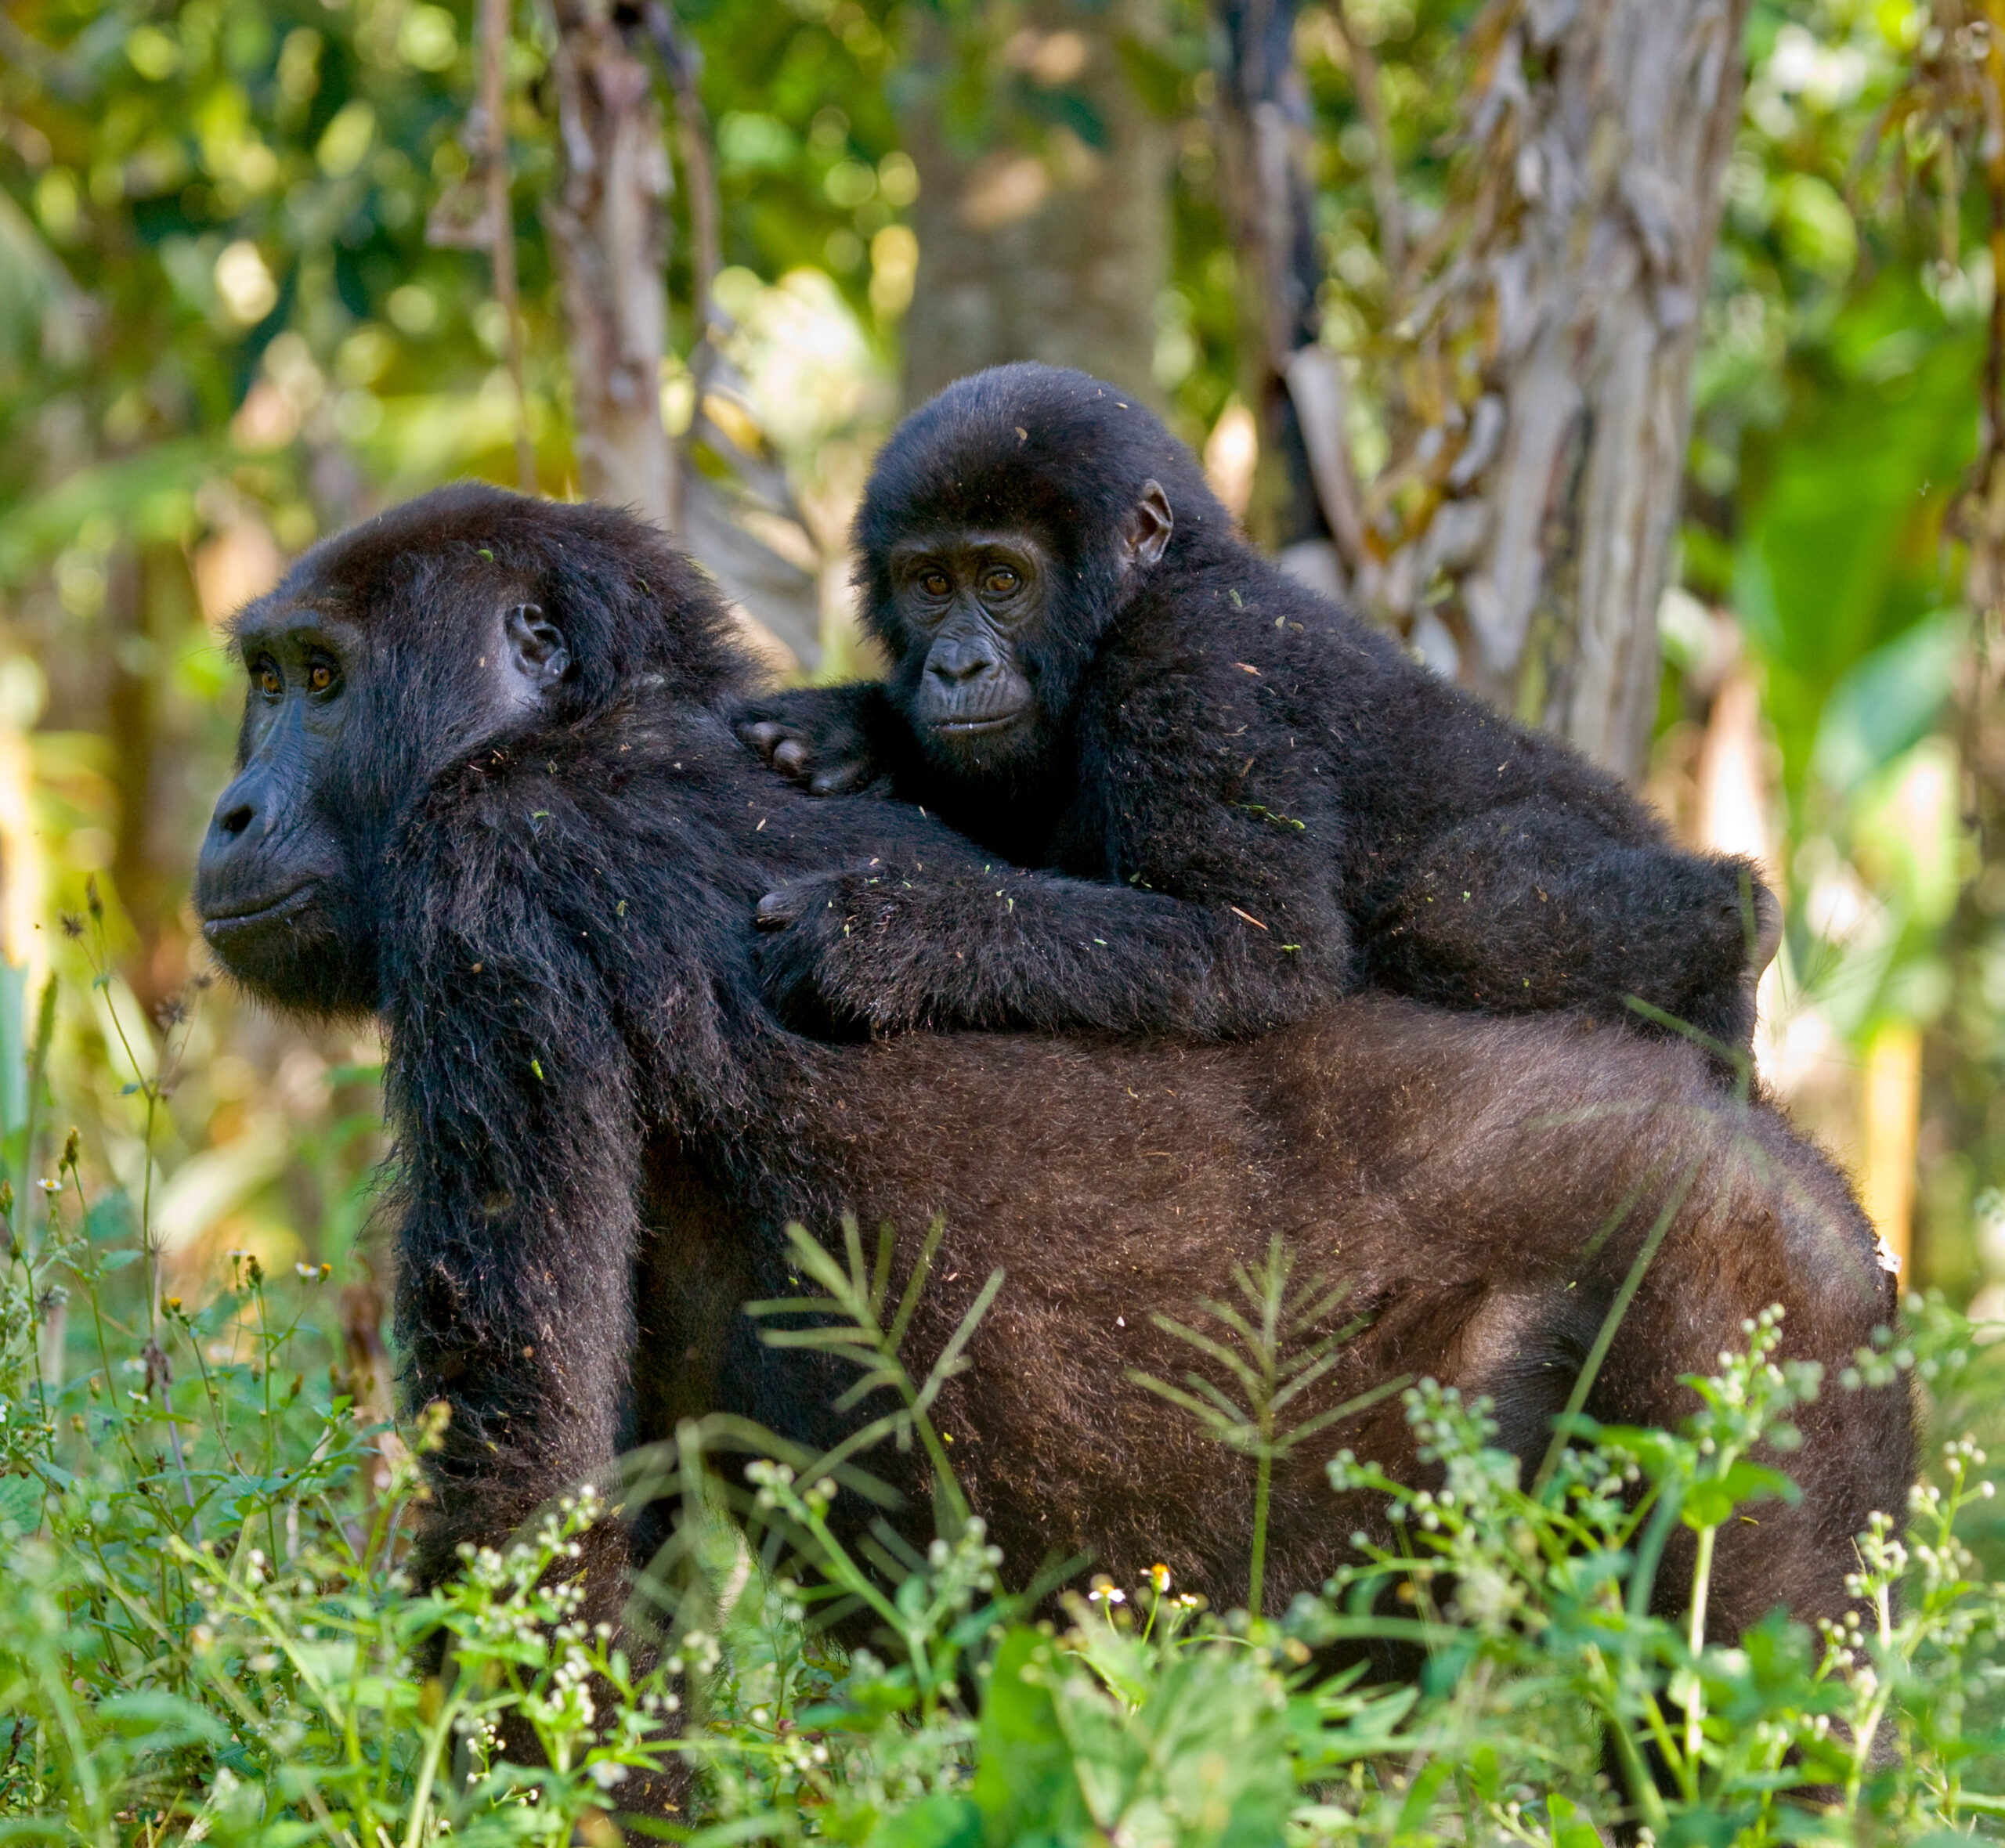 Uganda gorilla trekking tour safari | The Ultimate Gorilla Trekking Safari Tour in Uganda